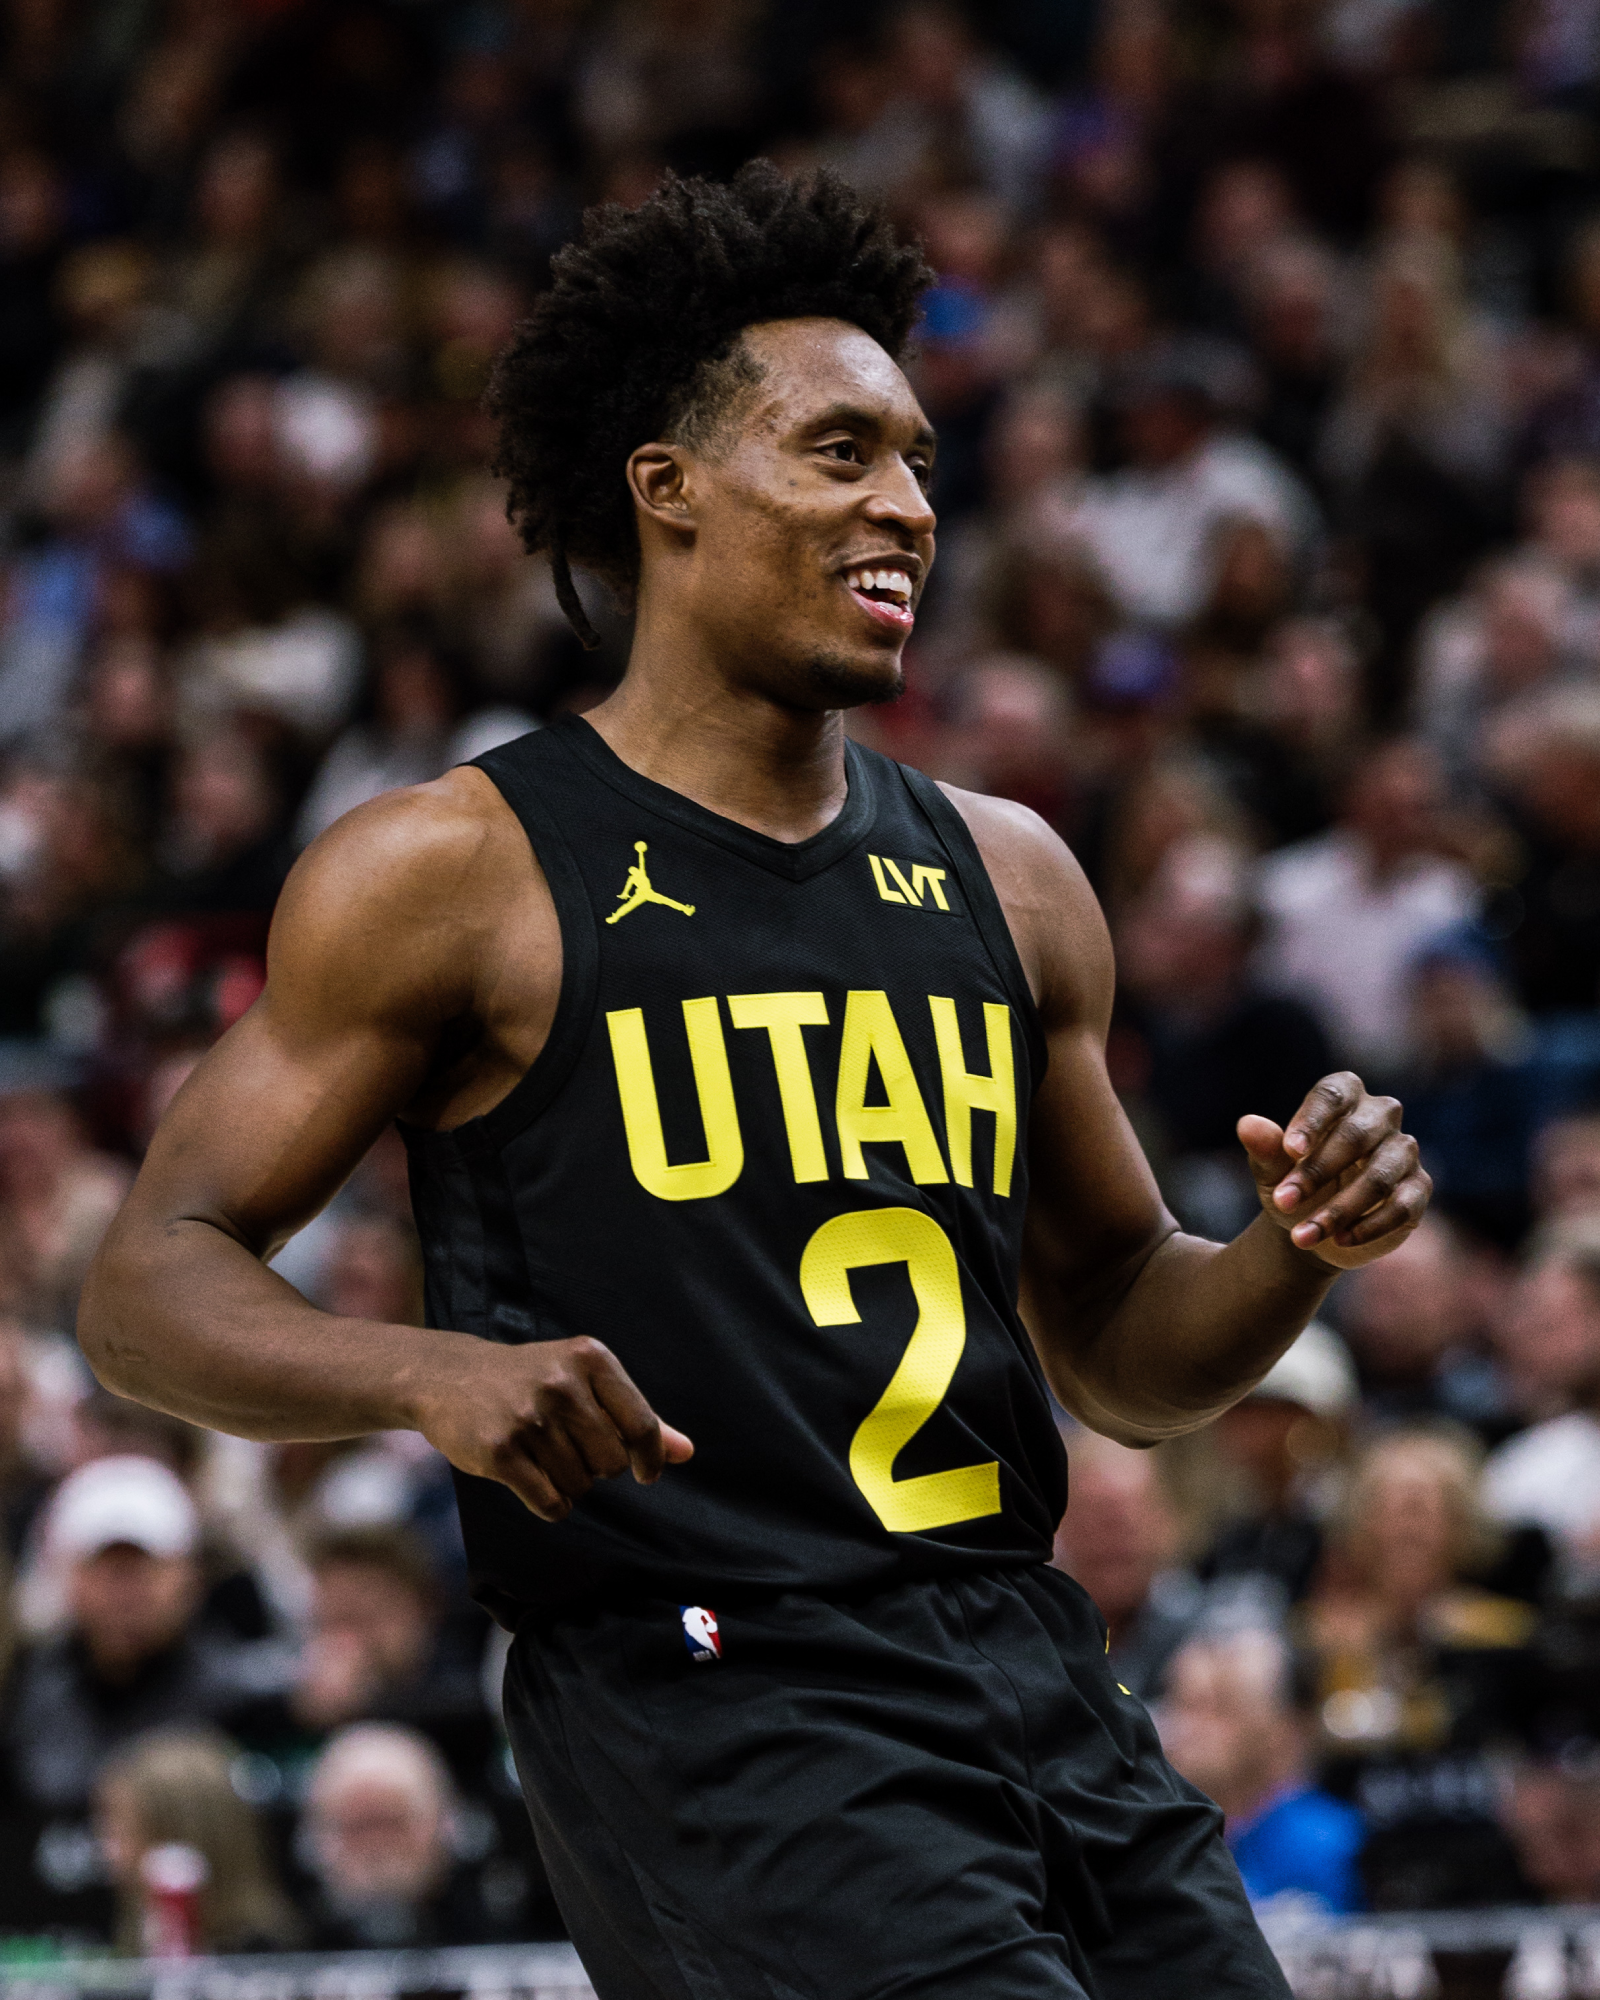 Utah Jazz Fanatics Authentic Team-Issued Black City Pants from the  2019-20 NBA Season